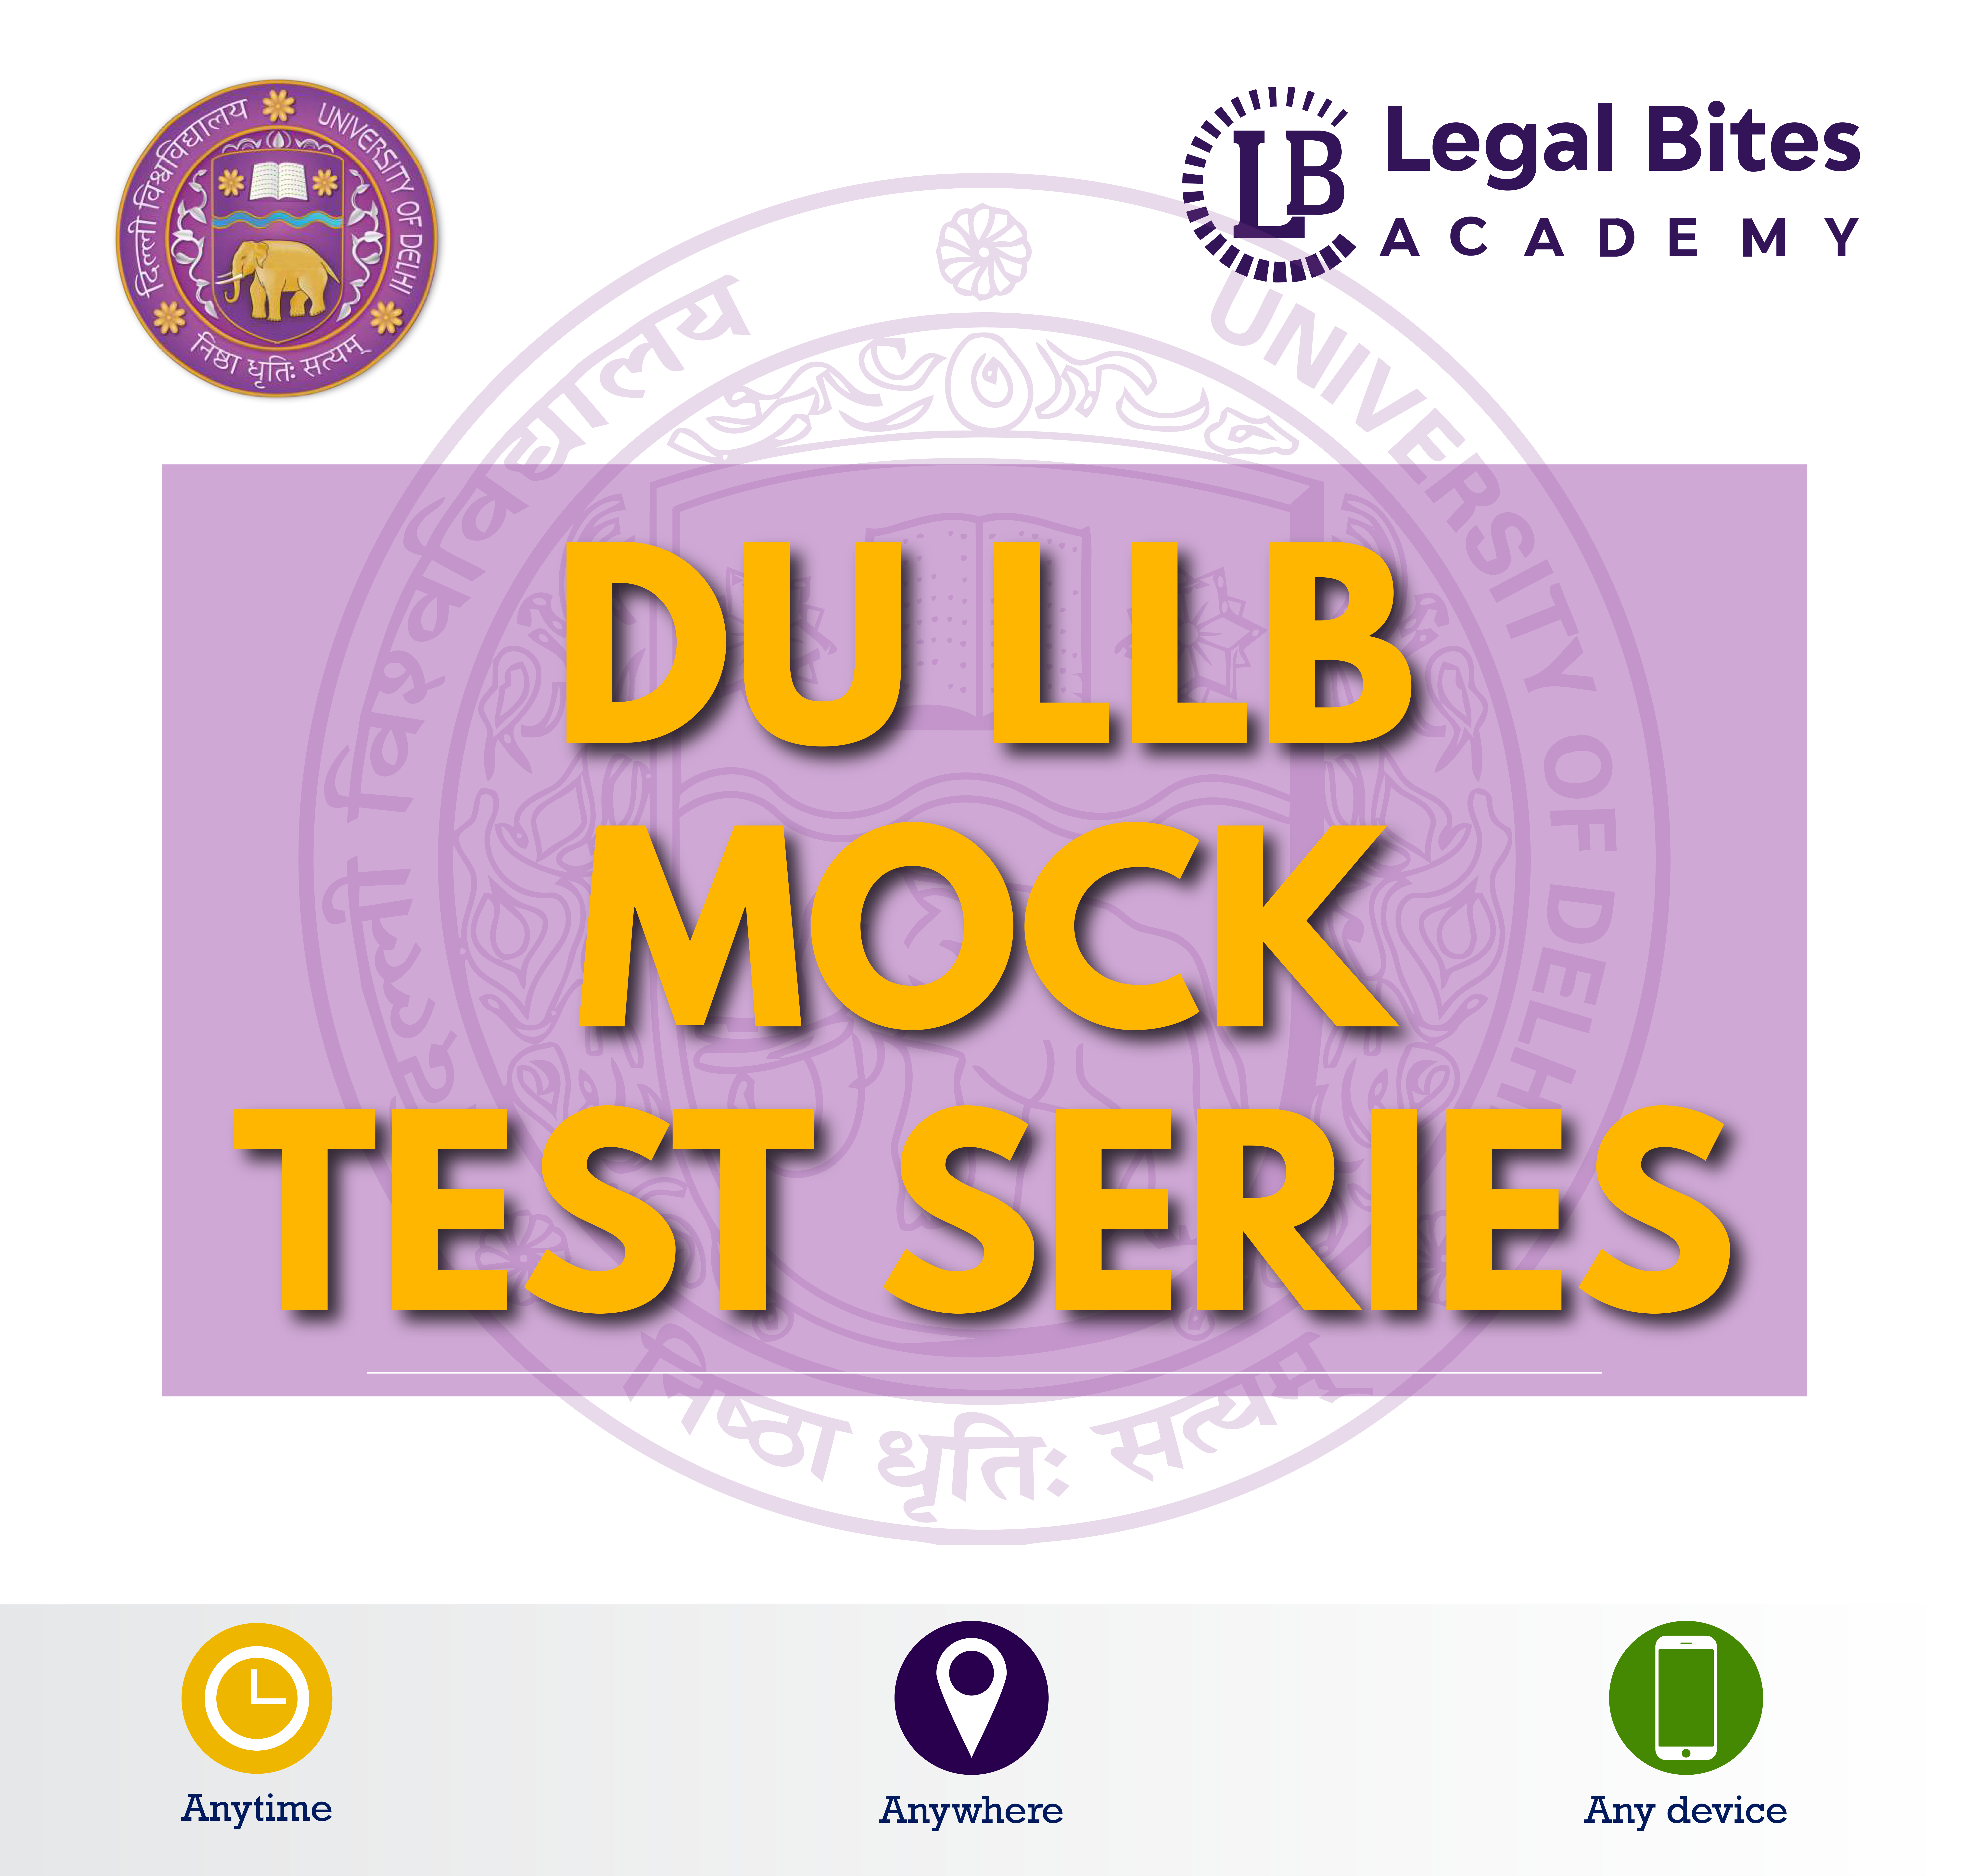 DU LLB Mock Test Series Product